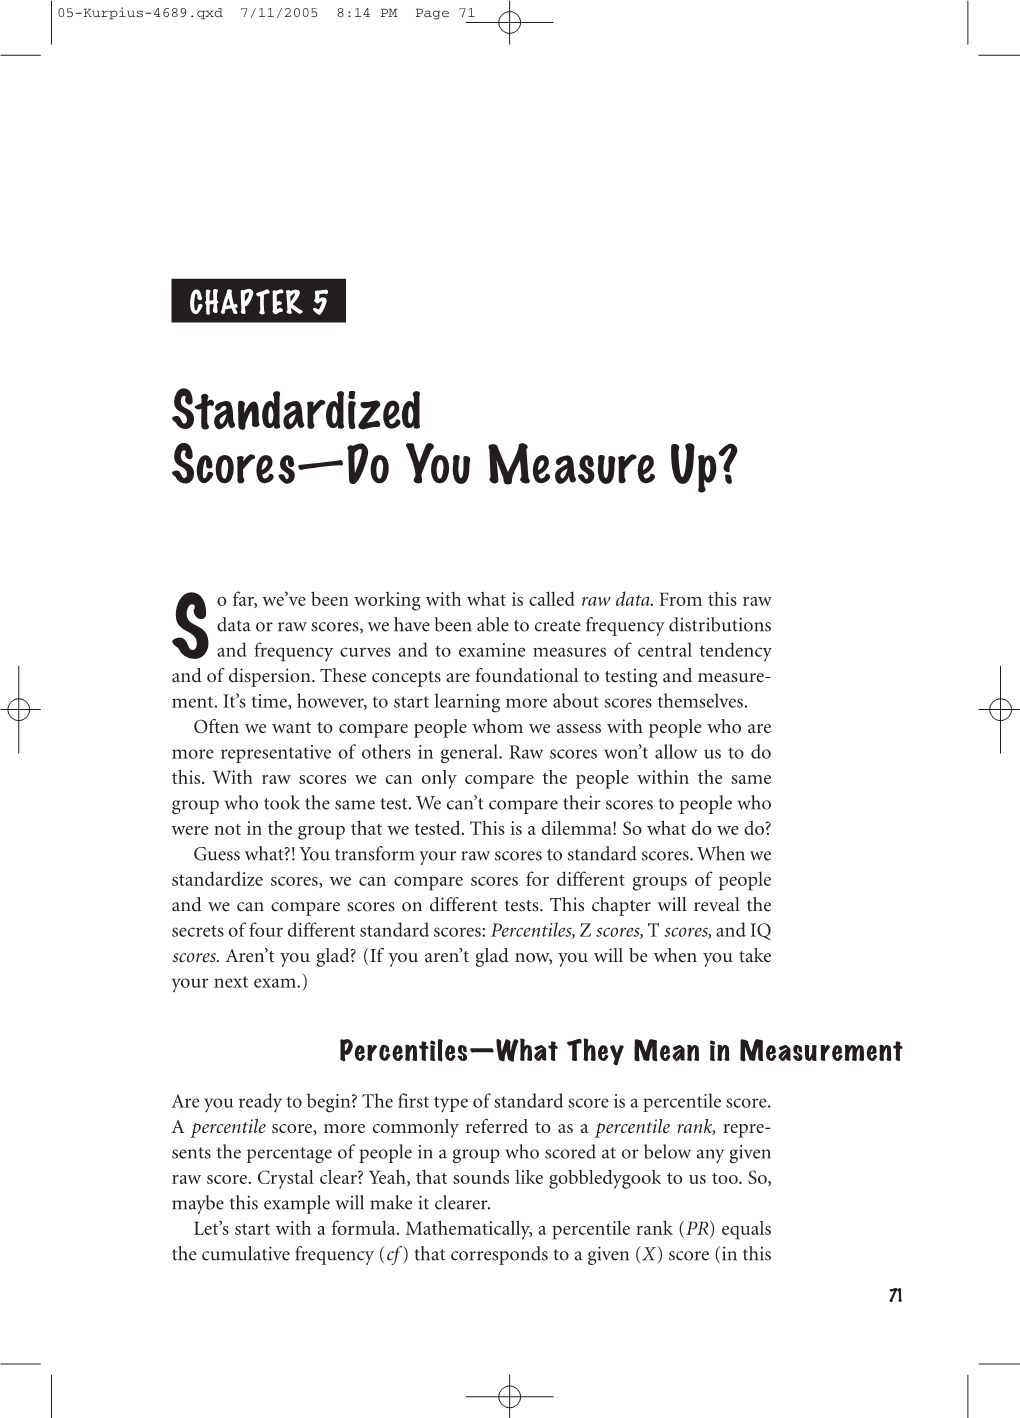 Standardized Scores—Do You Measure Up?